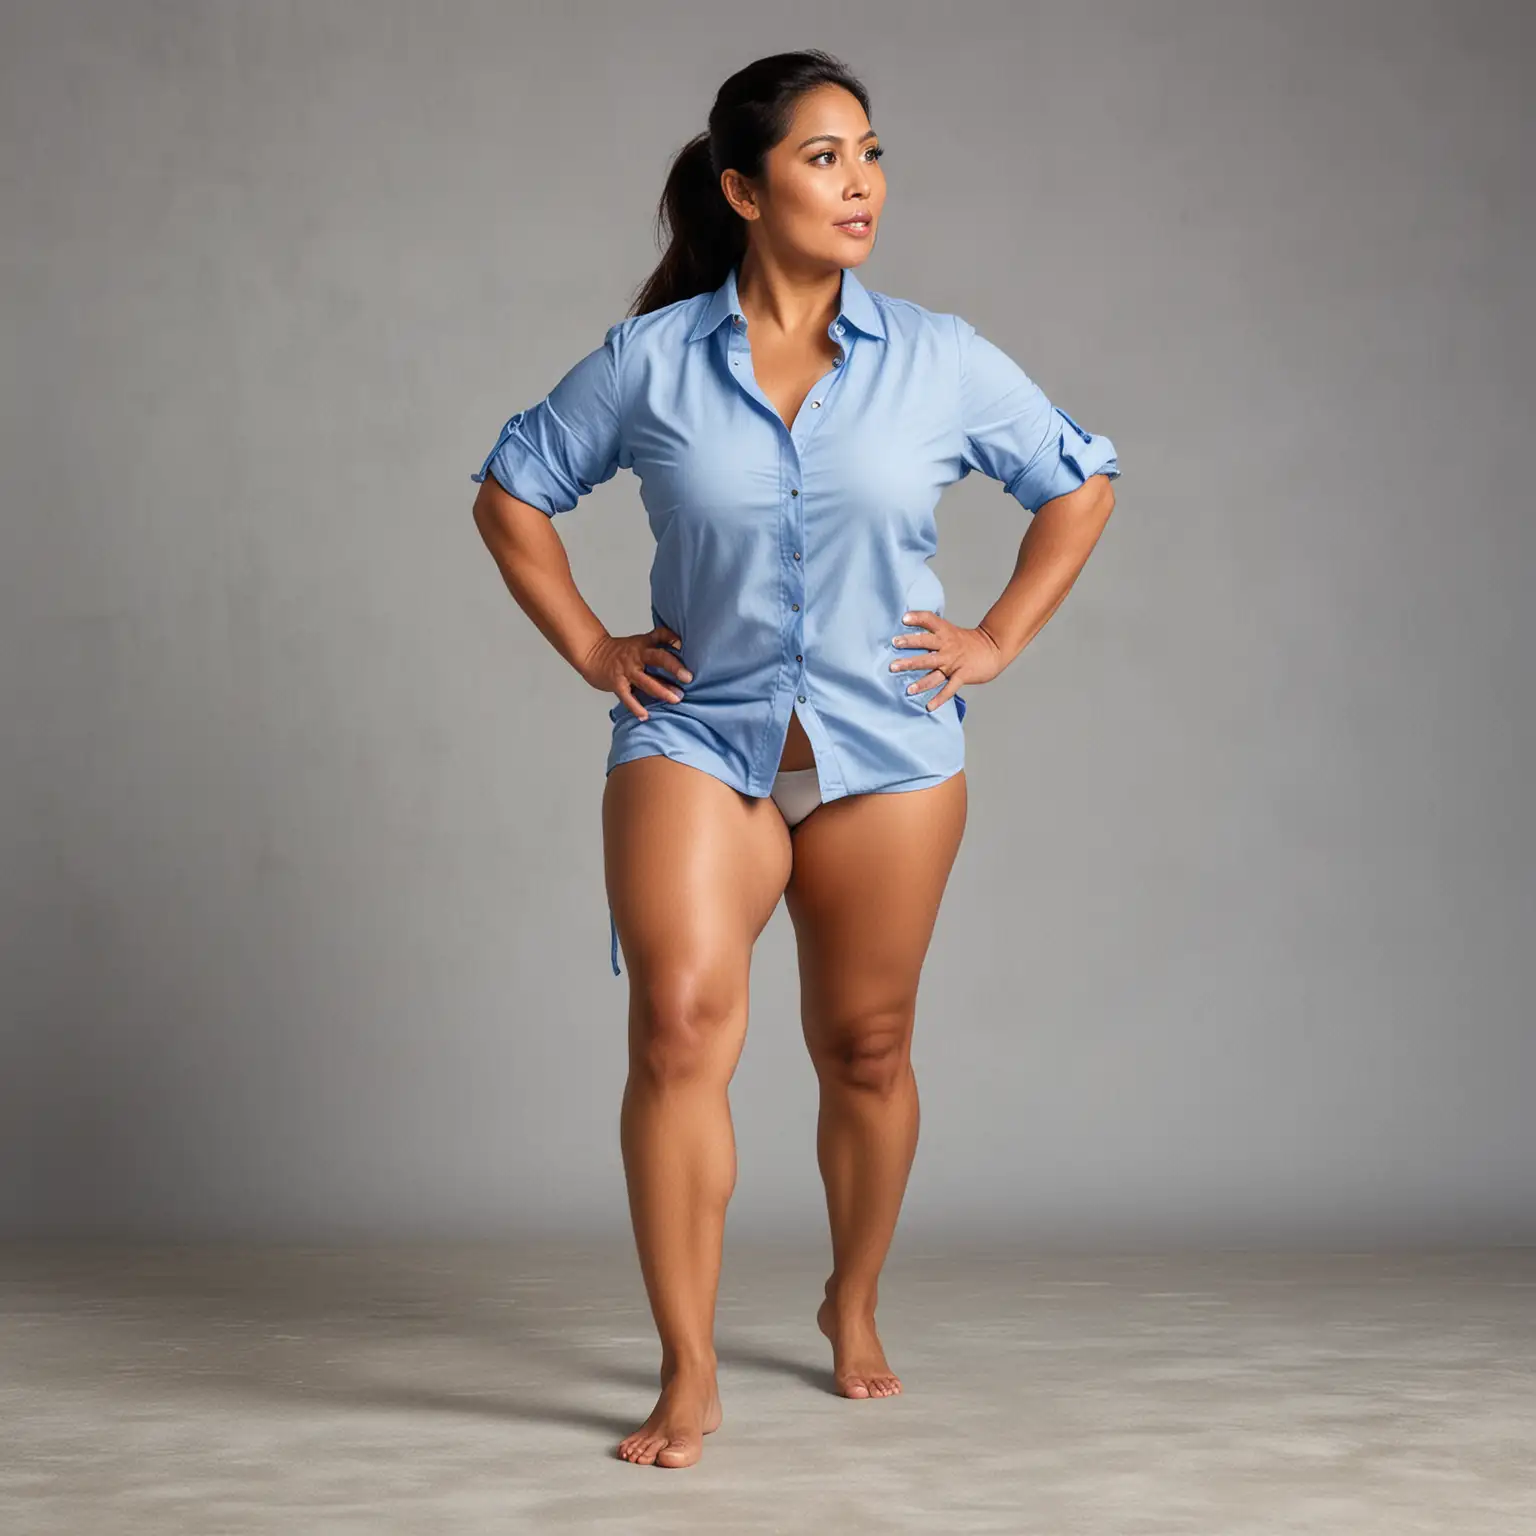 Fit and Confident Filipino Woman Doing Squats in Casual Attire